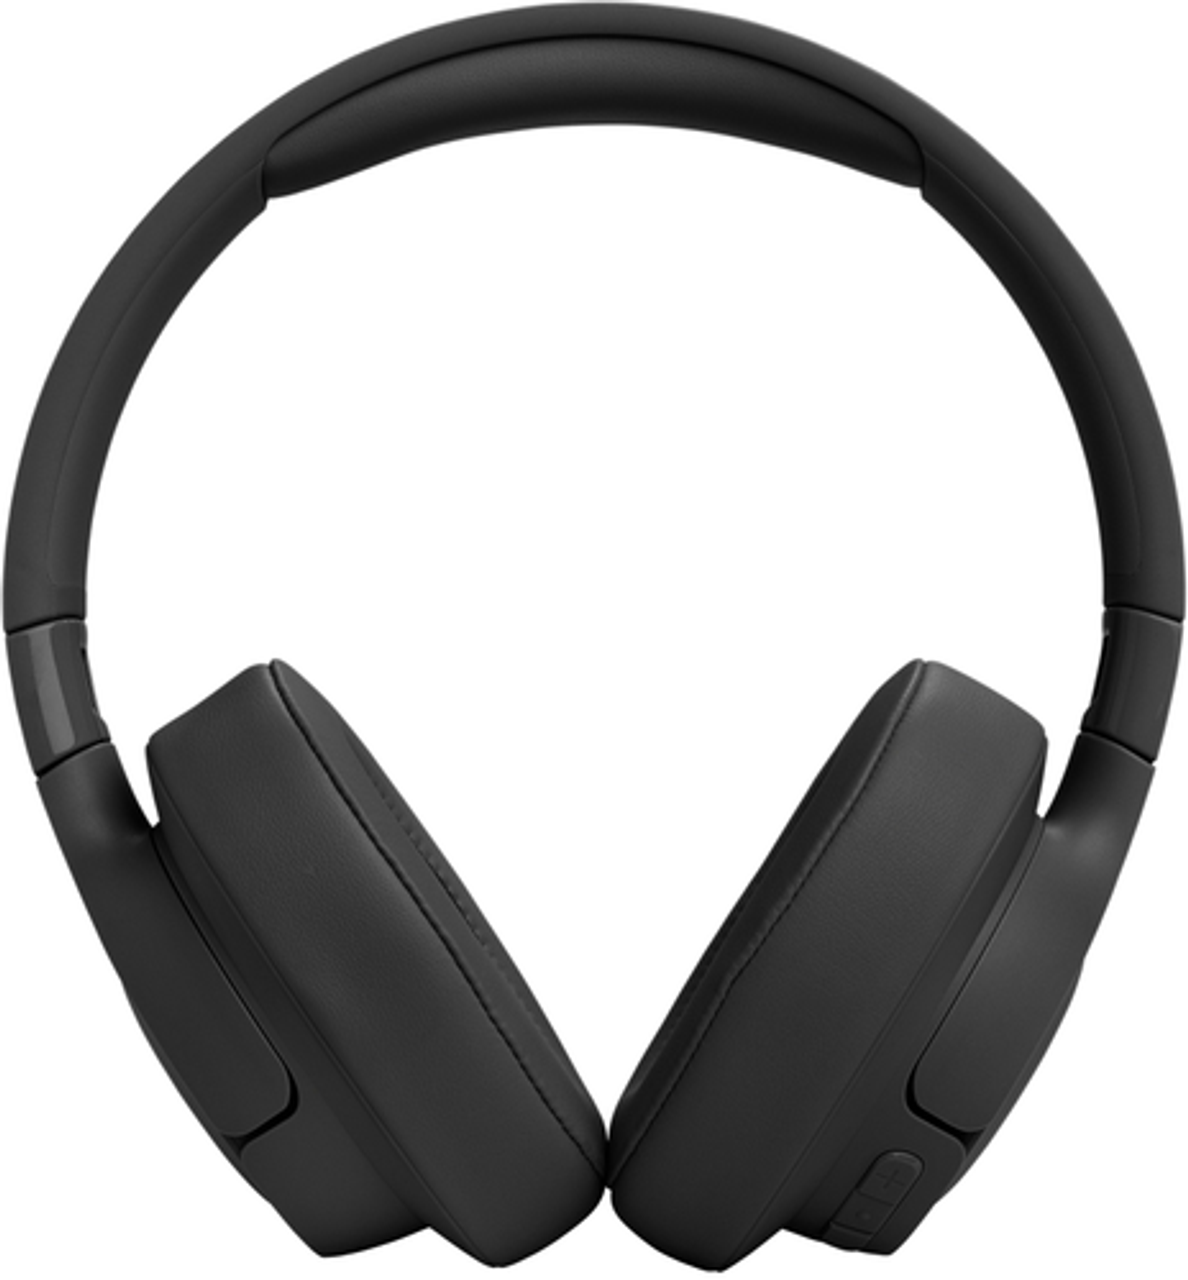 JBL - Adaptive Noise Cancelling Wireless Over-Ear Headphone - Black